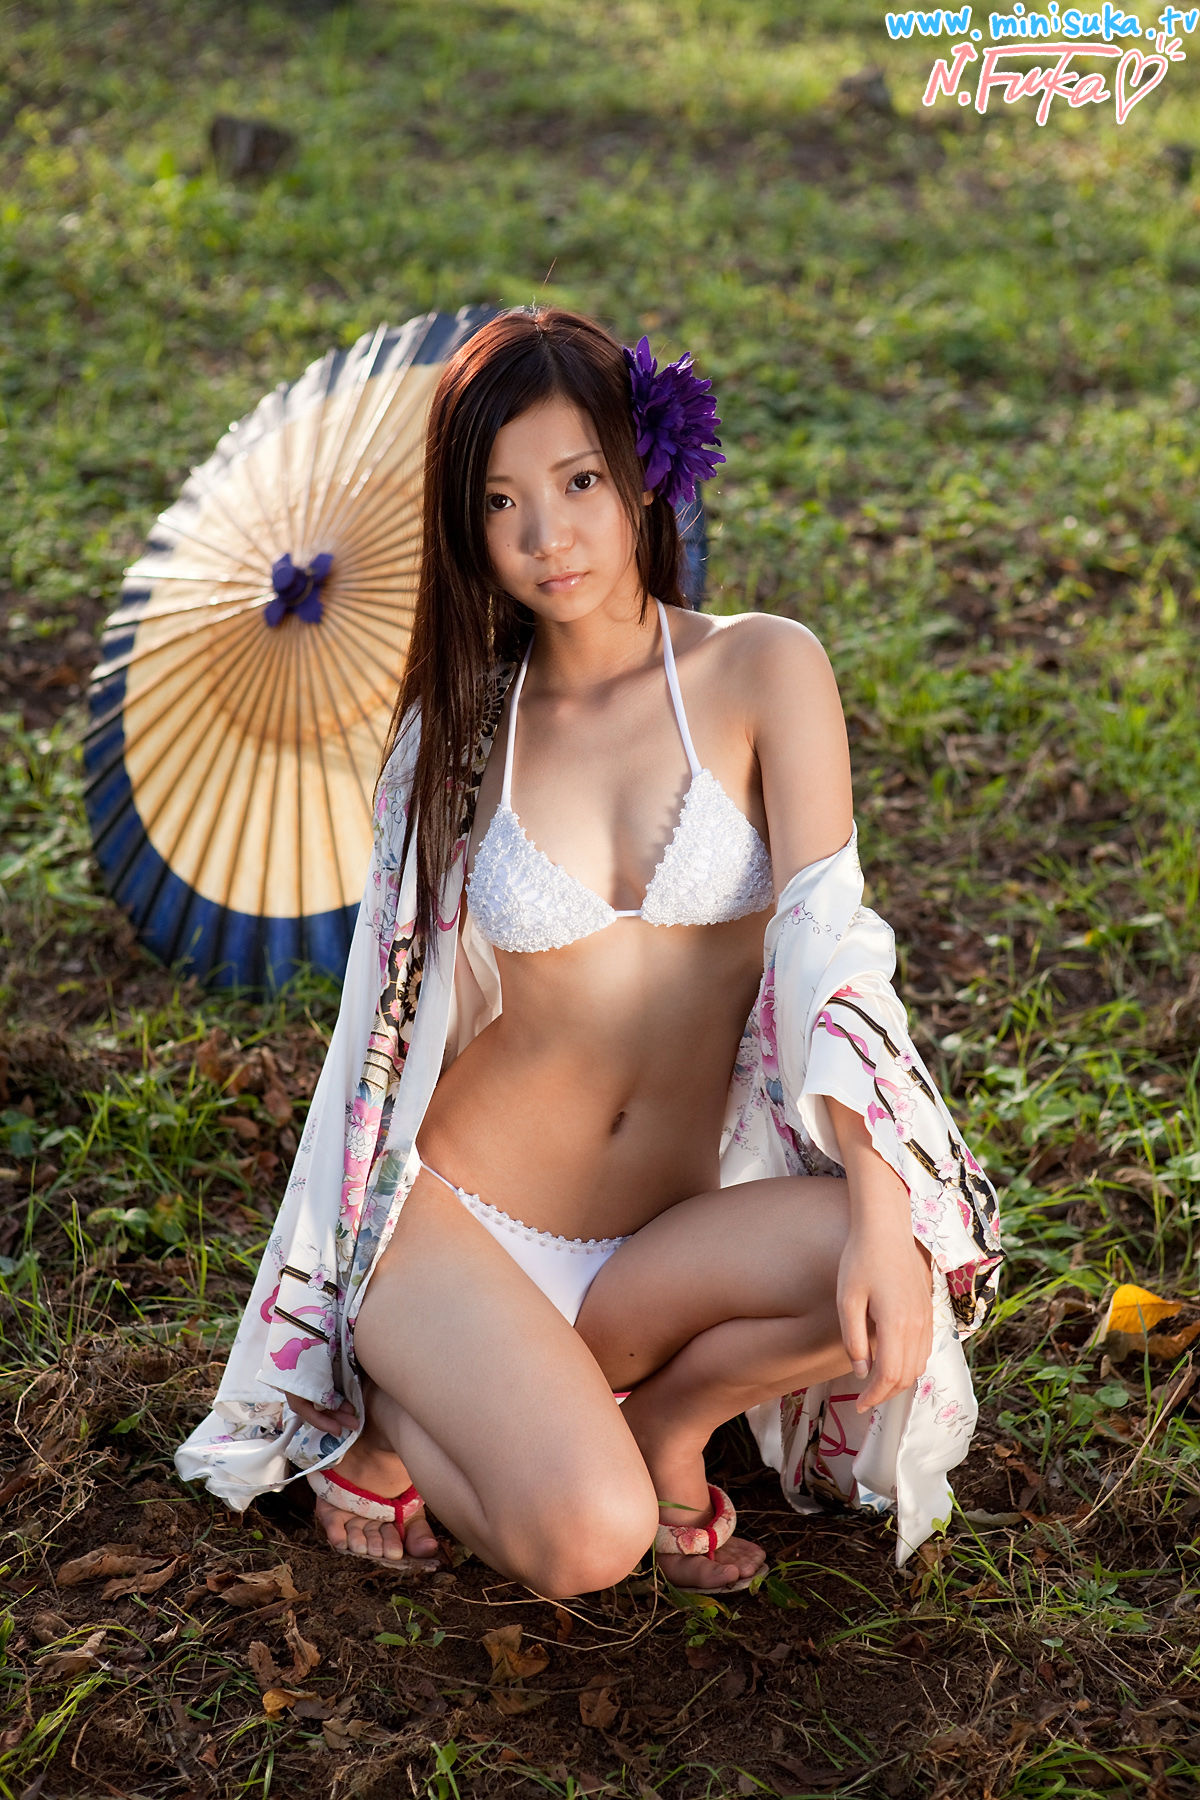 [Minisuka.tv]美少女日本少女:西浜ふうか无圣光私房照片在线浏览(125P)